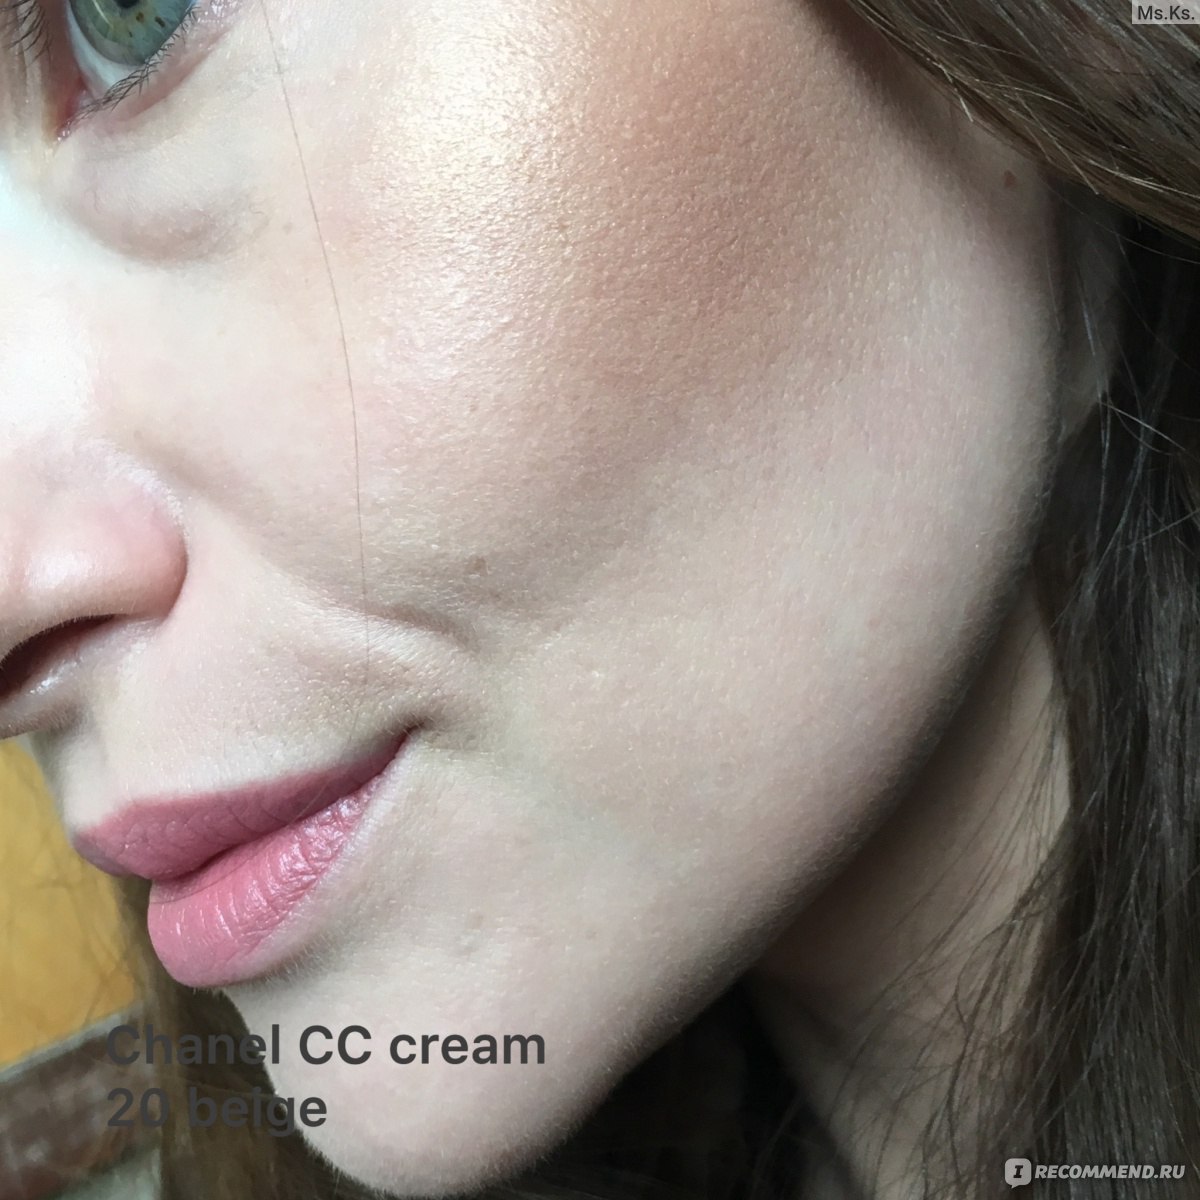 Chanel CC Cream  отзывы